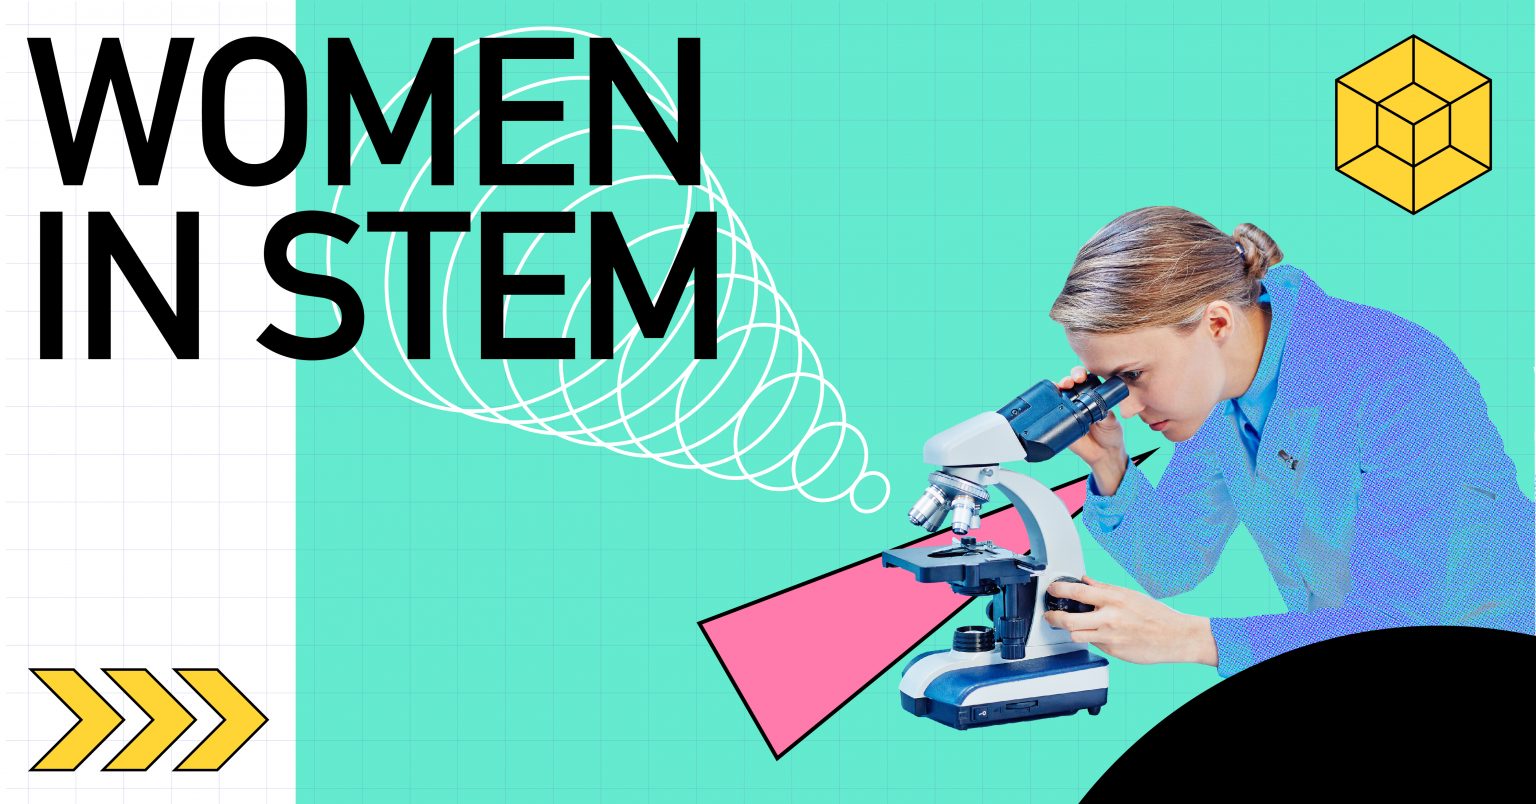 Women In STEM Blog Cover 01 1 1536x804 